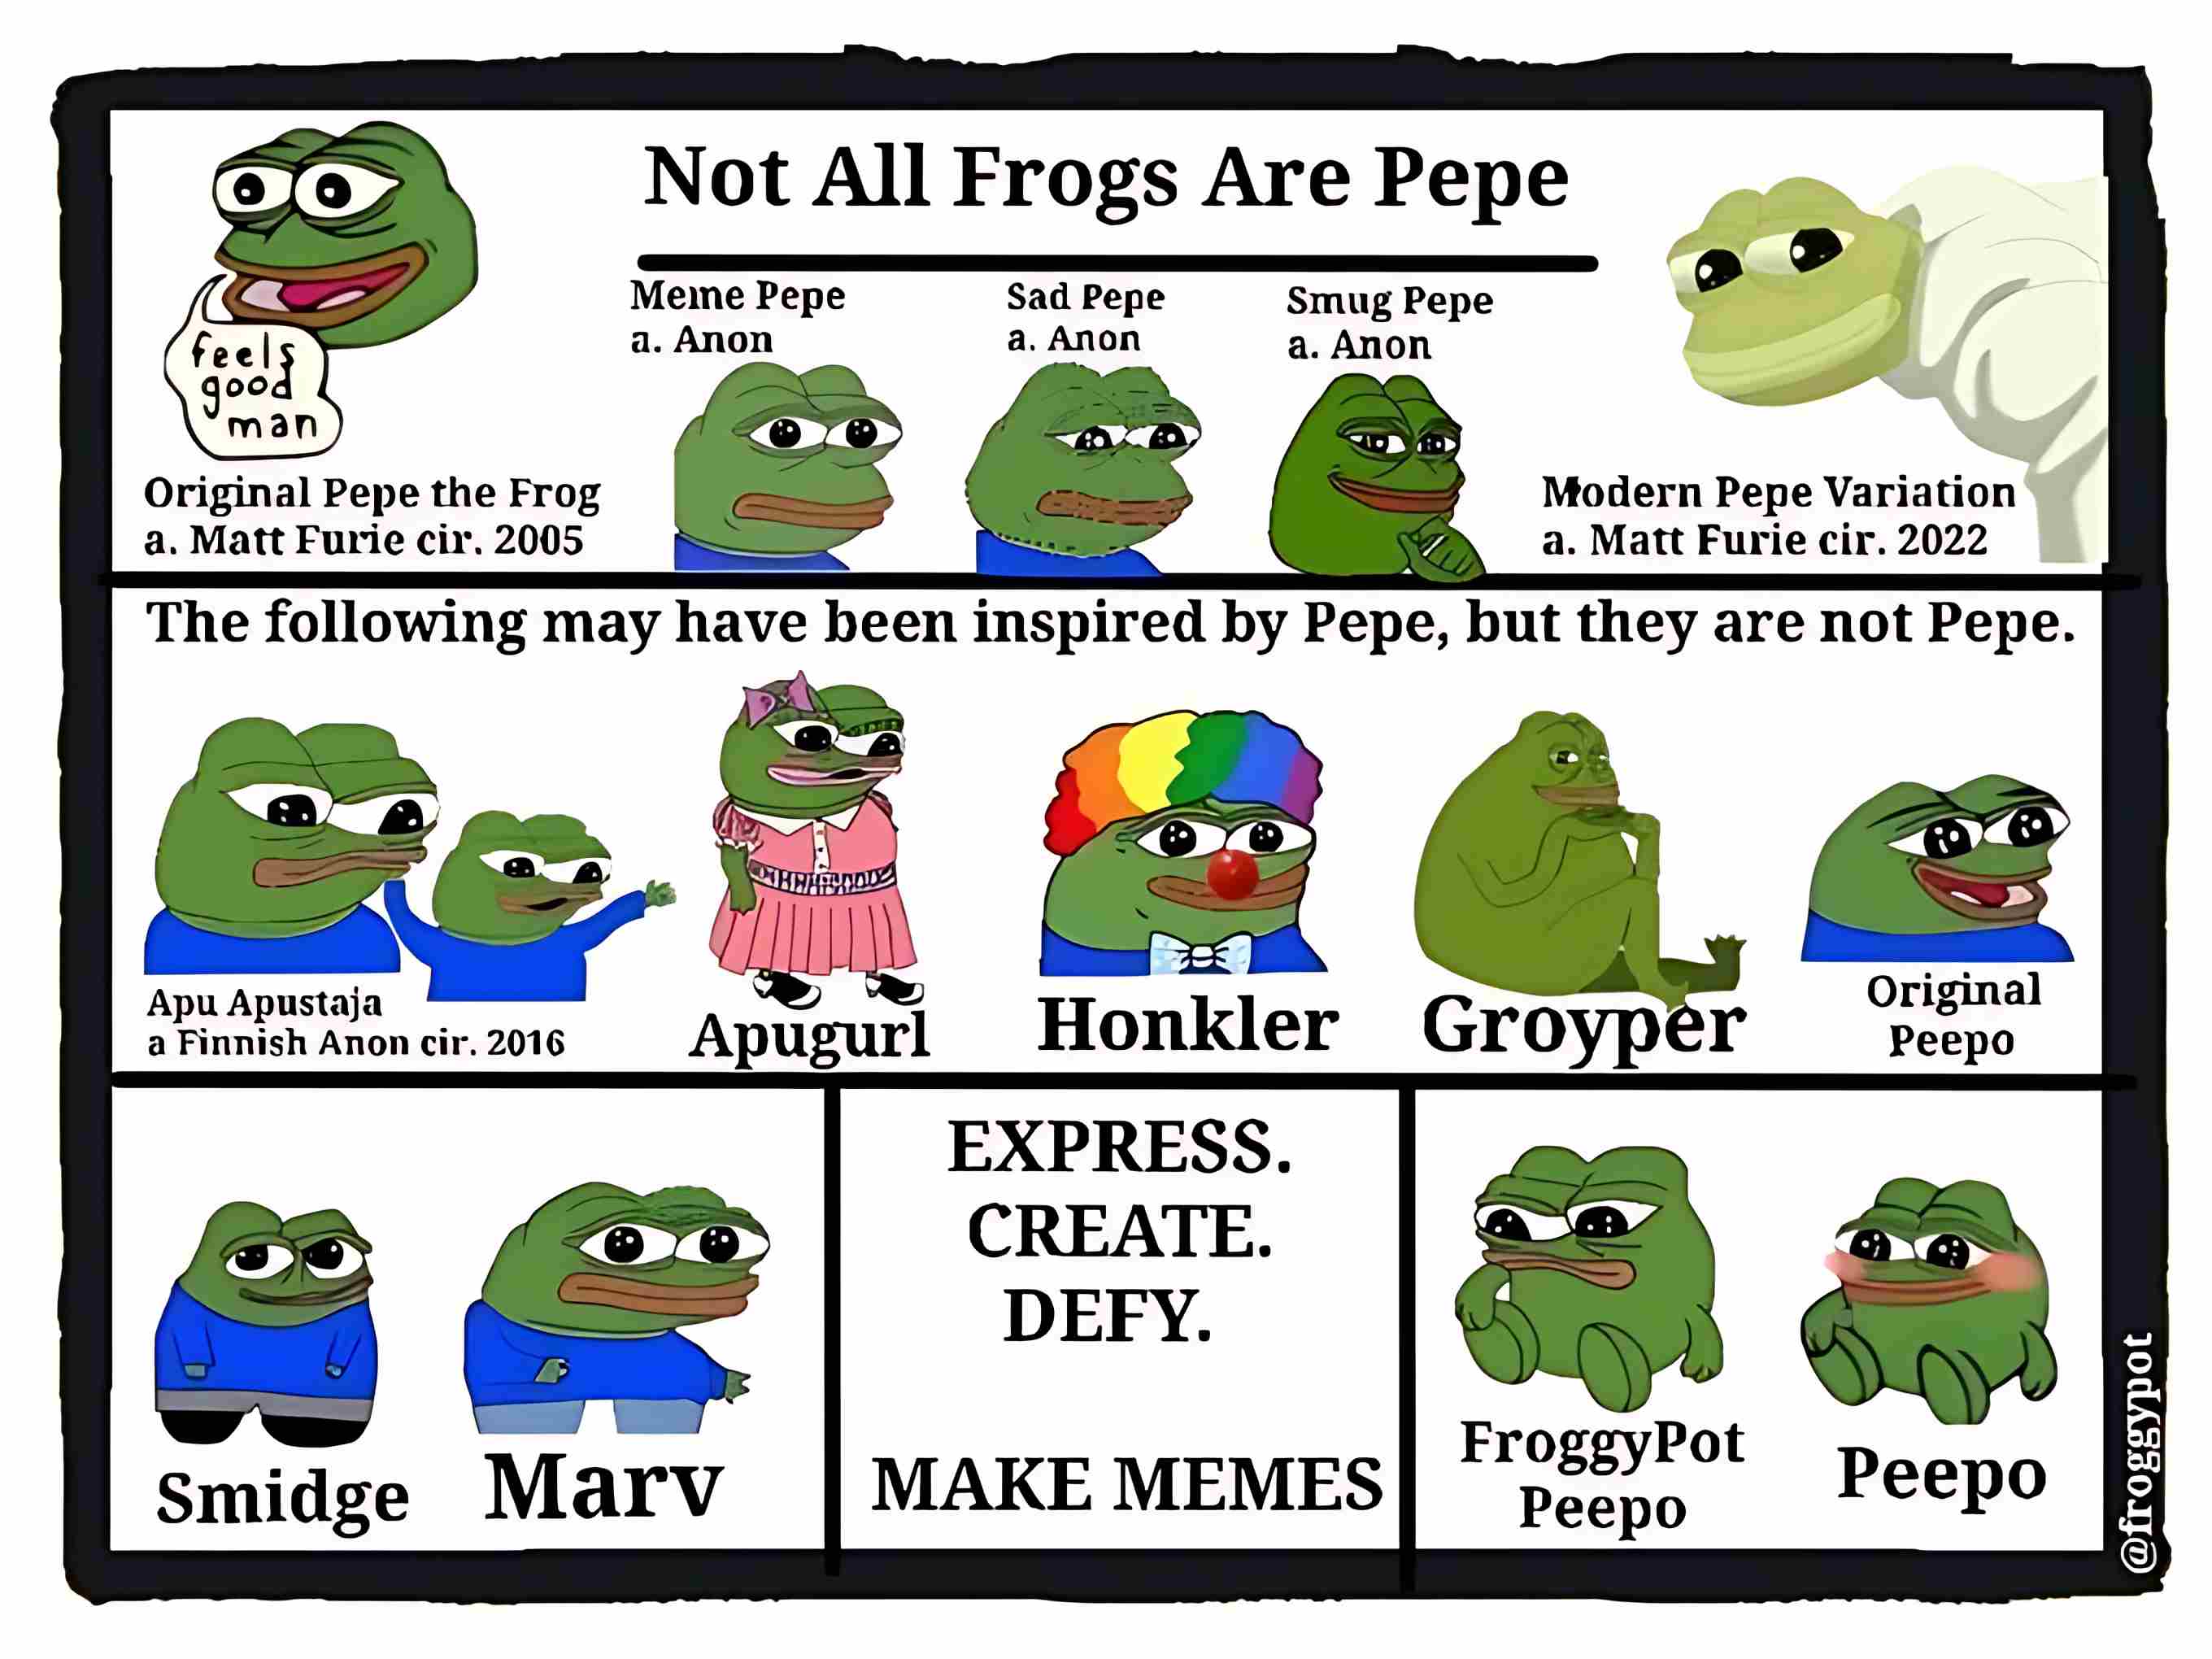 Pepe大反弹，一览青蛙系Meme家谱与背后文化